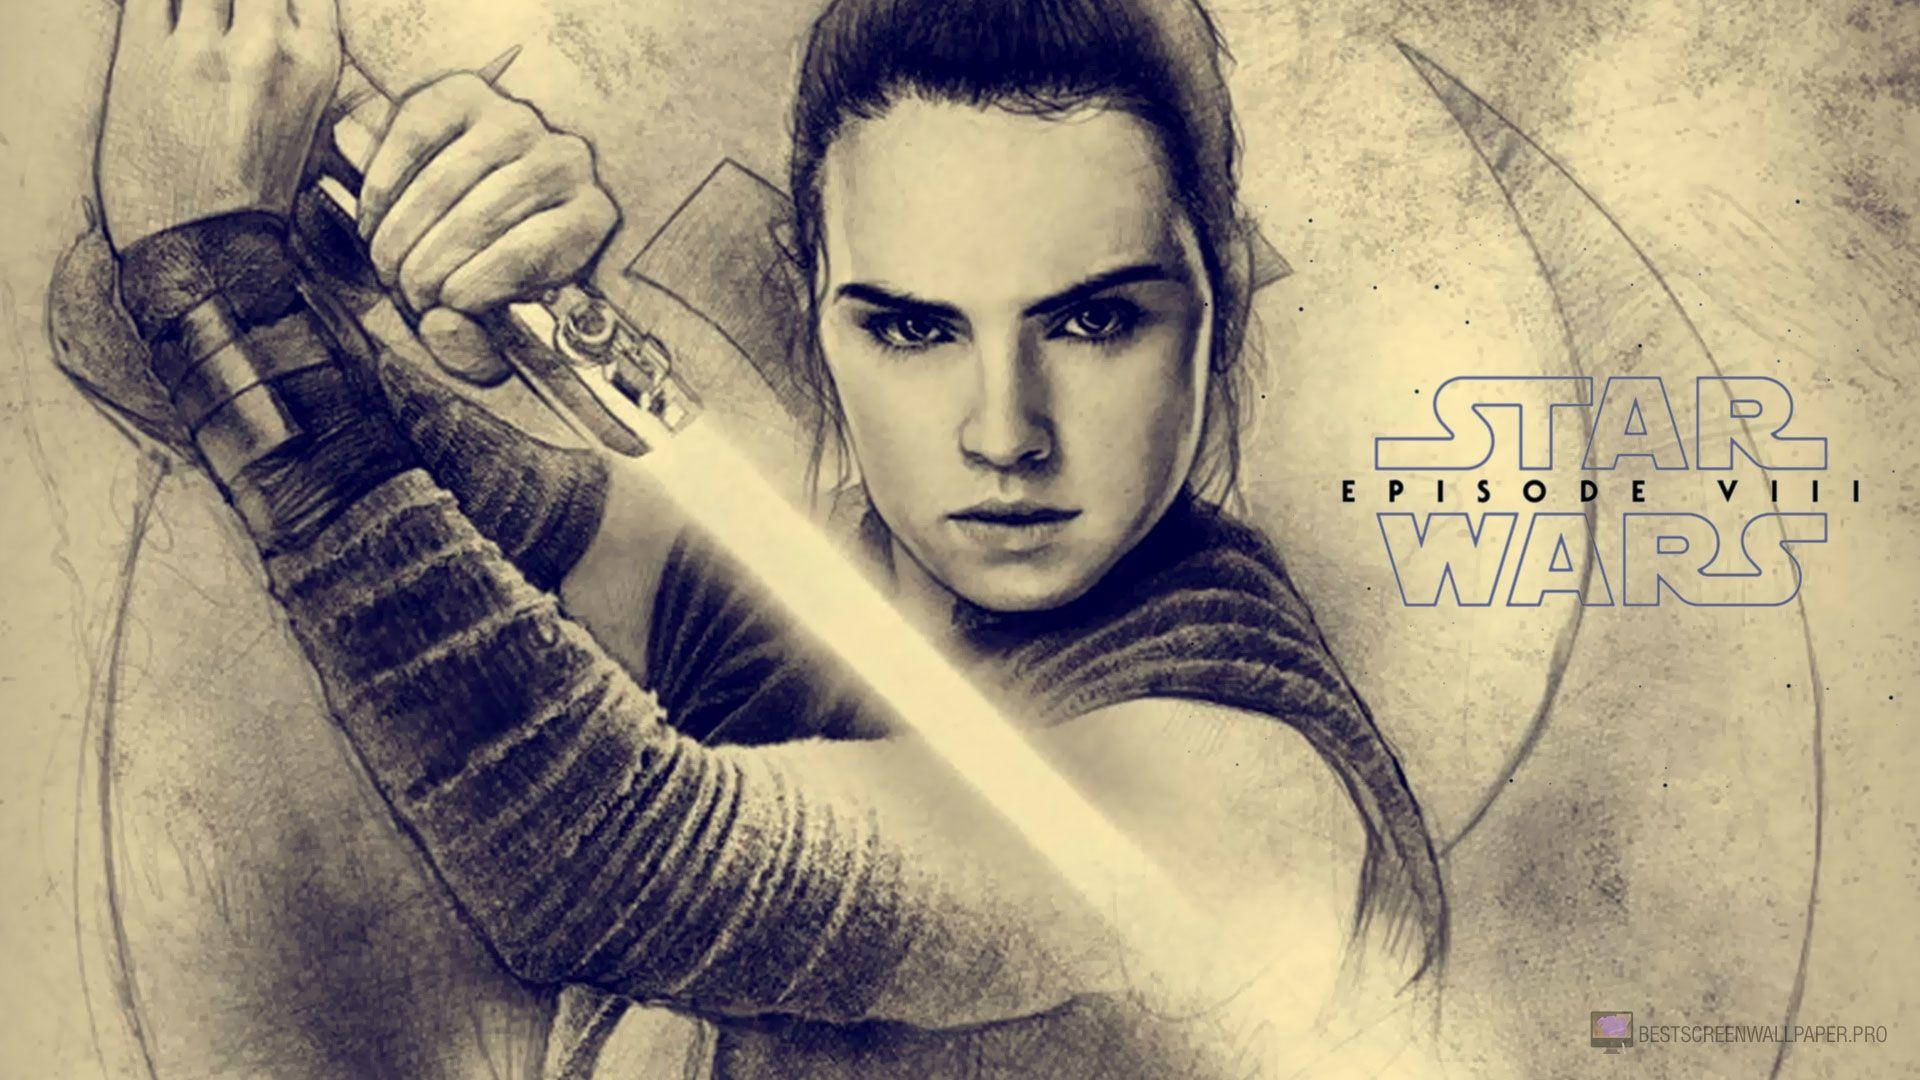 Rey trades blows with Kylo Ren in Star Wars: The Last Jedi Wallpaper